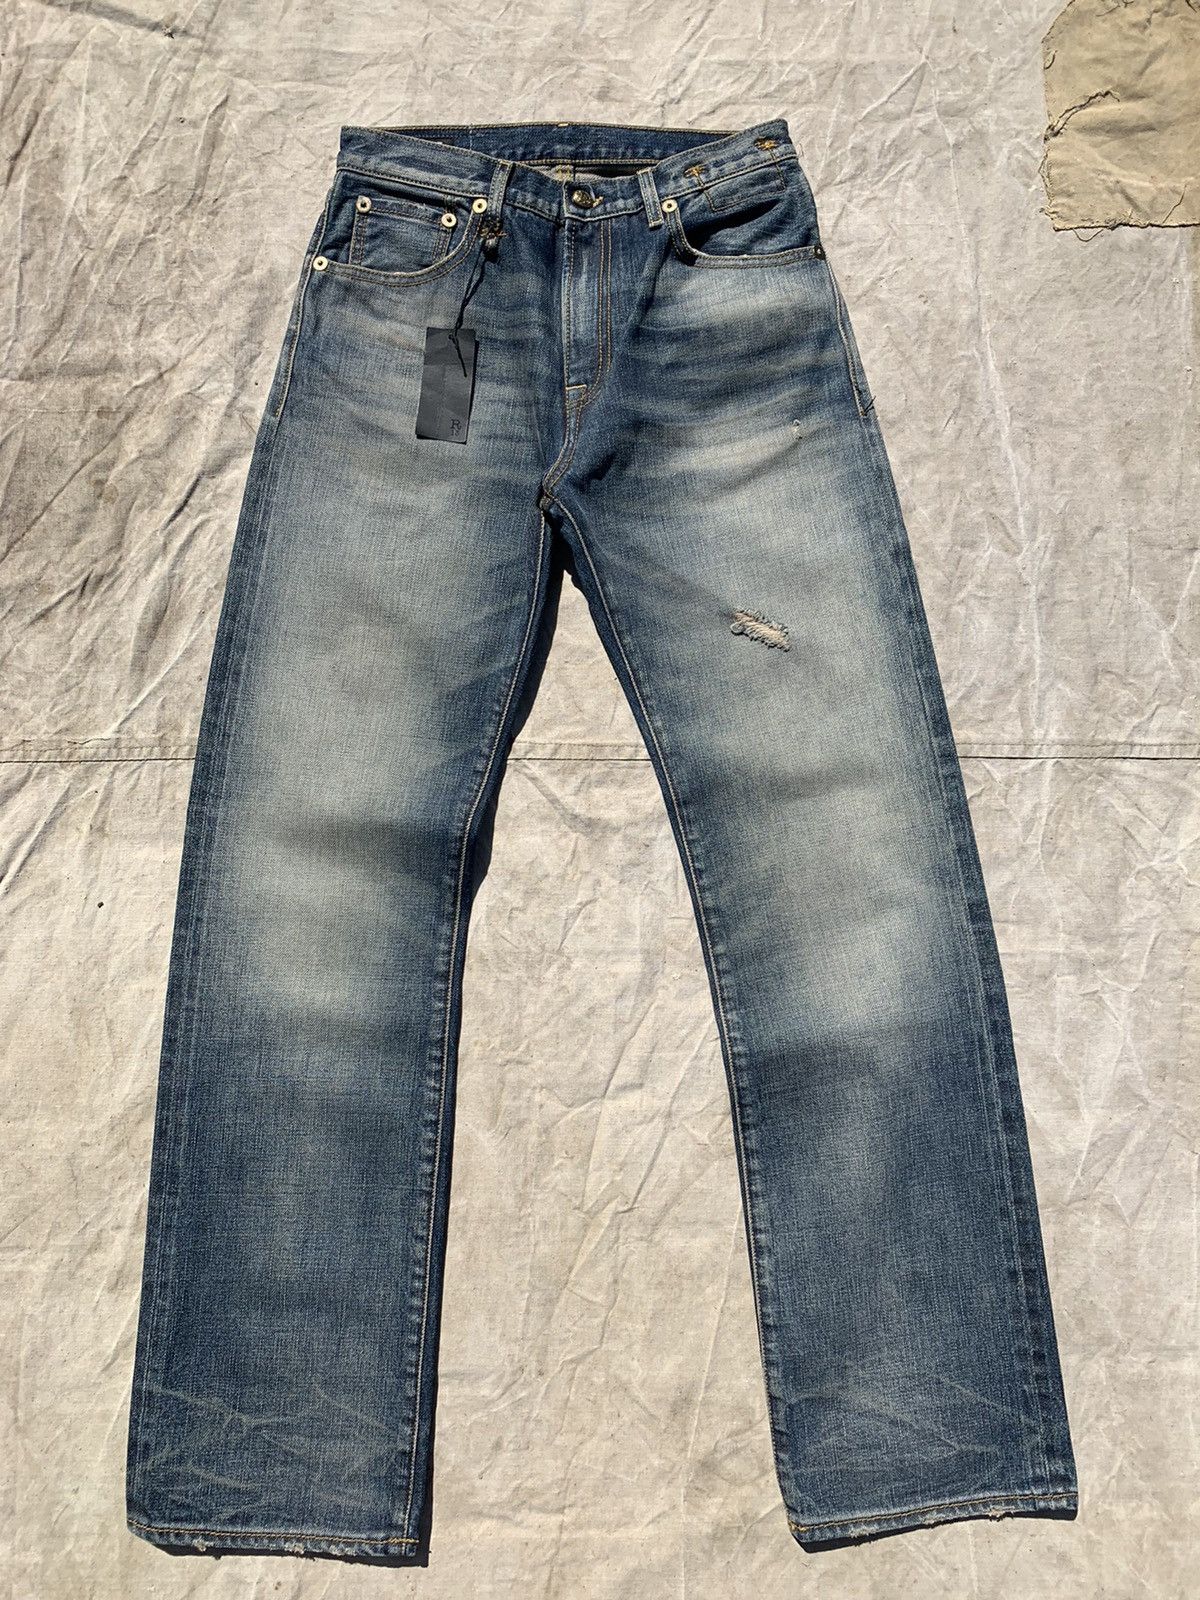 R13 R13 Marlon Japanese Selvedge Denim Jeans | Grailed